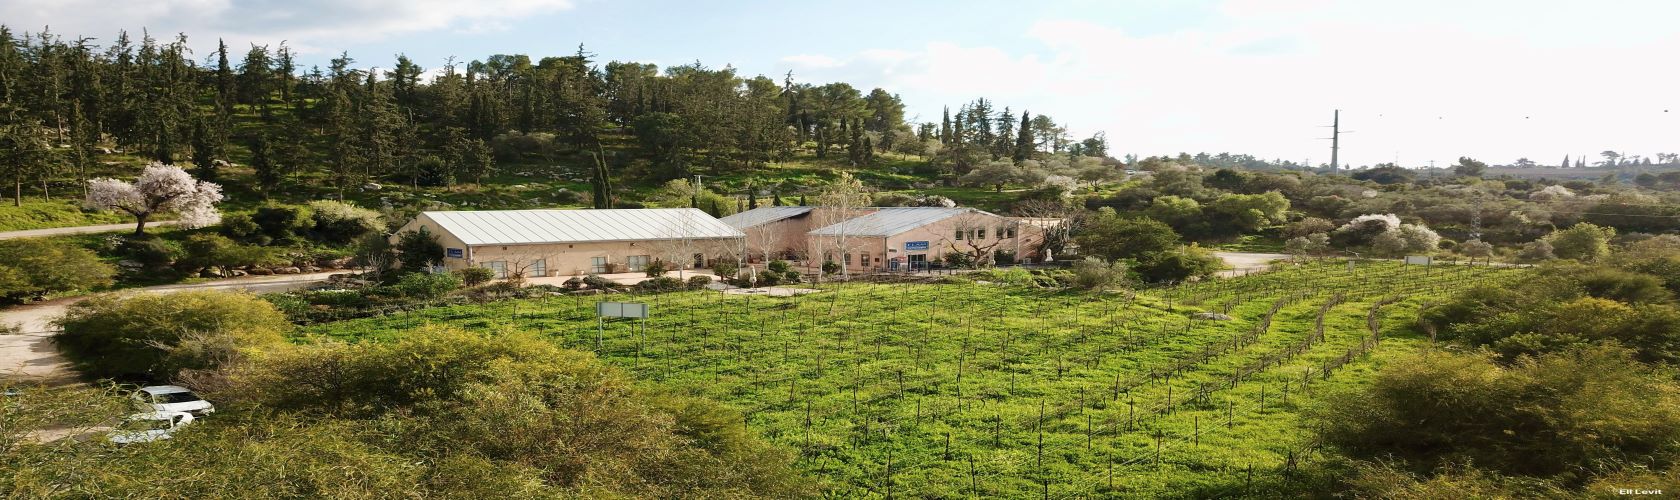 Flam: uma vinícola artesanal de grandes vinhos israelenses